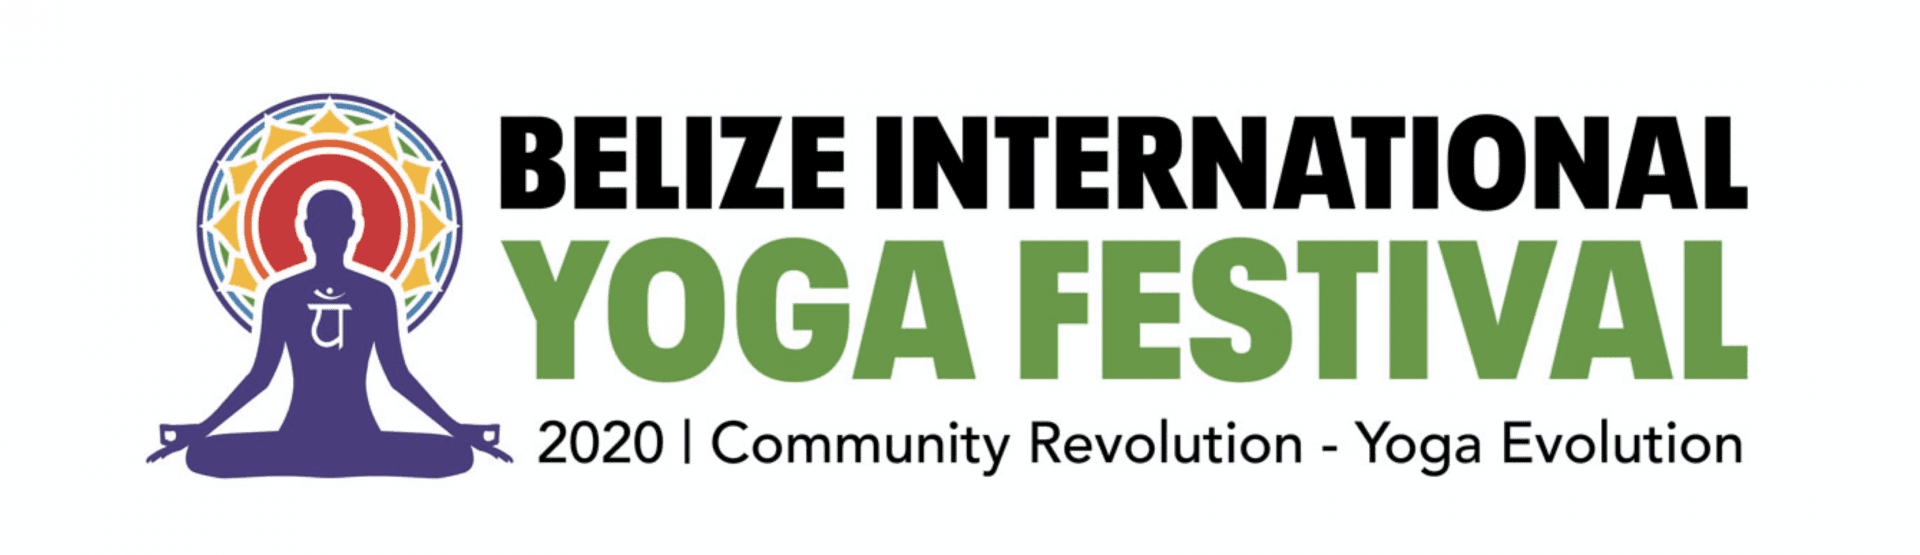 2020 international yoga festival belize